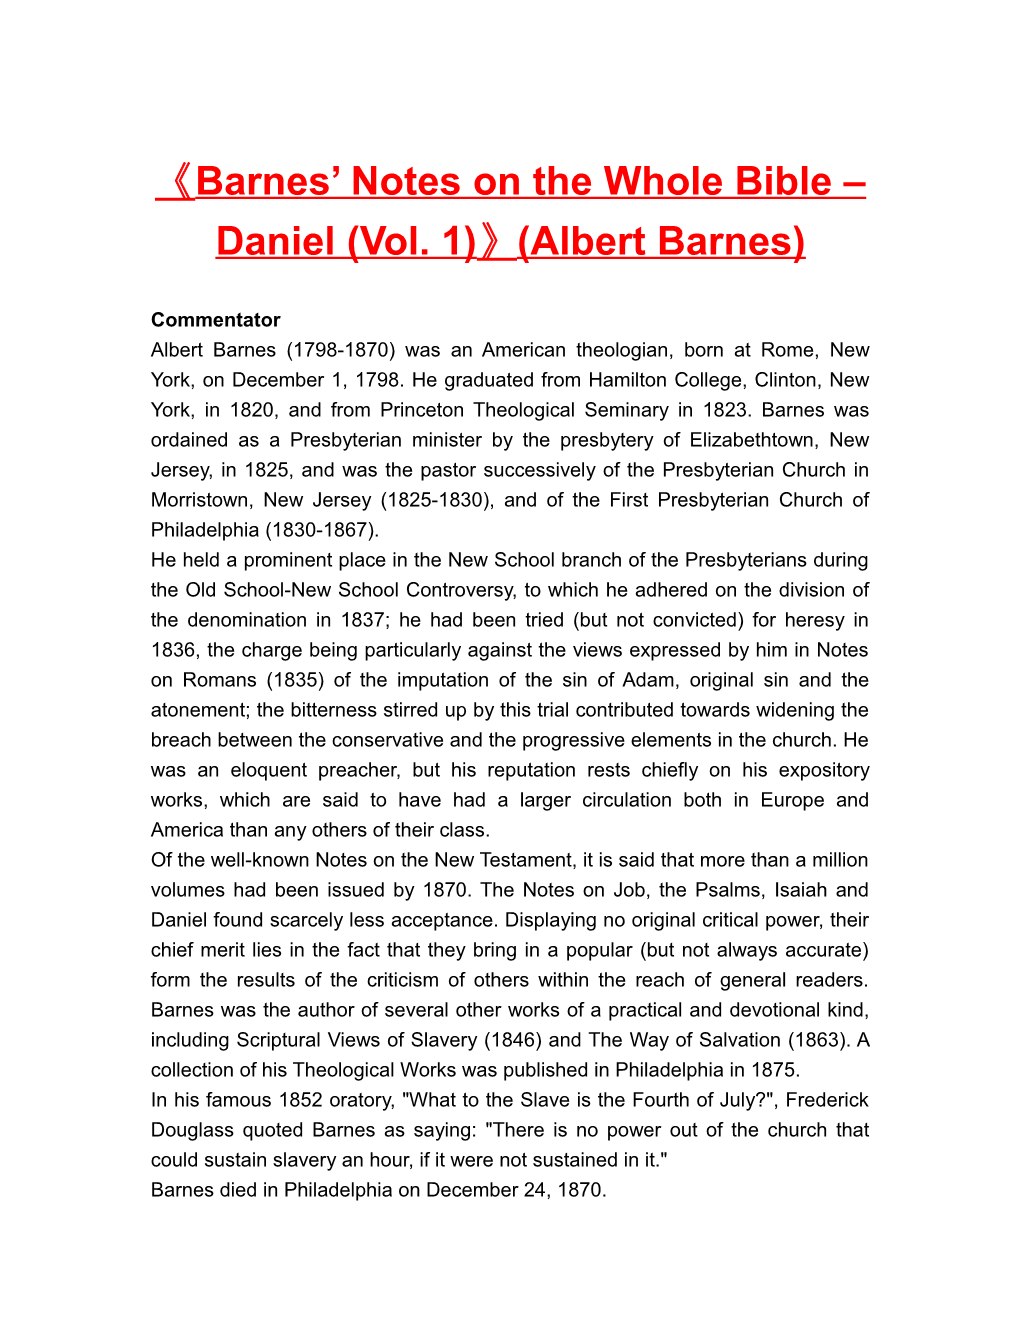 Barnes Notes on the Whole Bible Daniel (Vol. 1) (Albert Barnes)